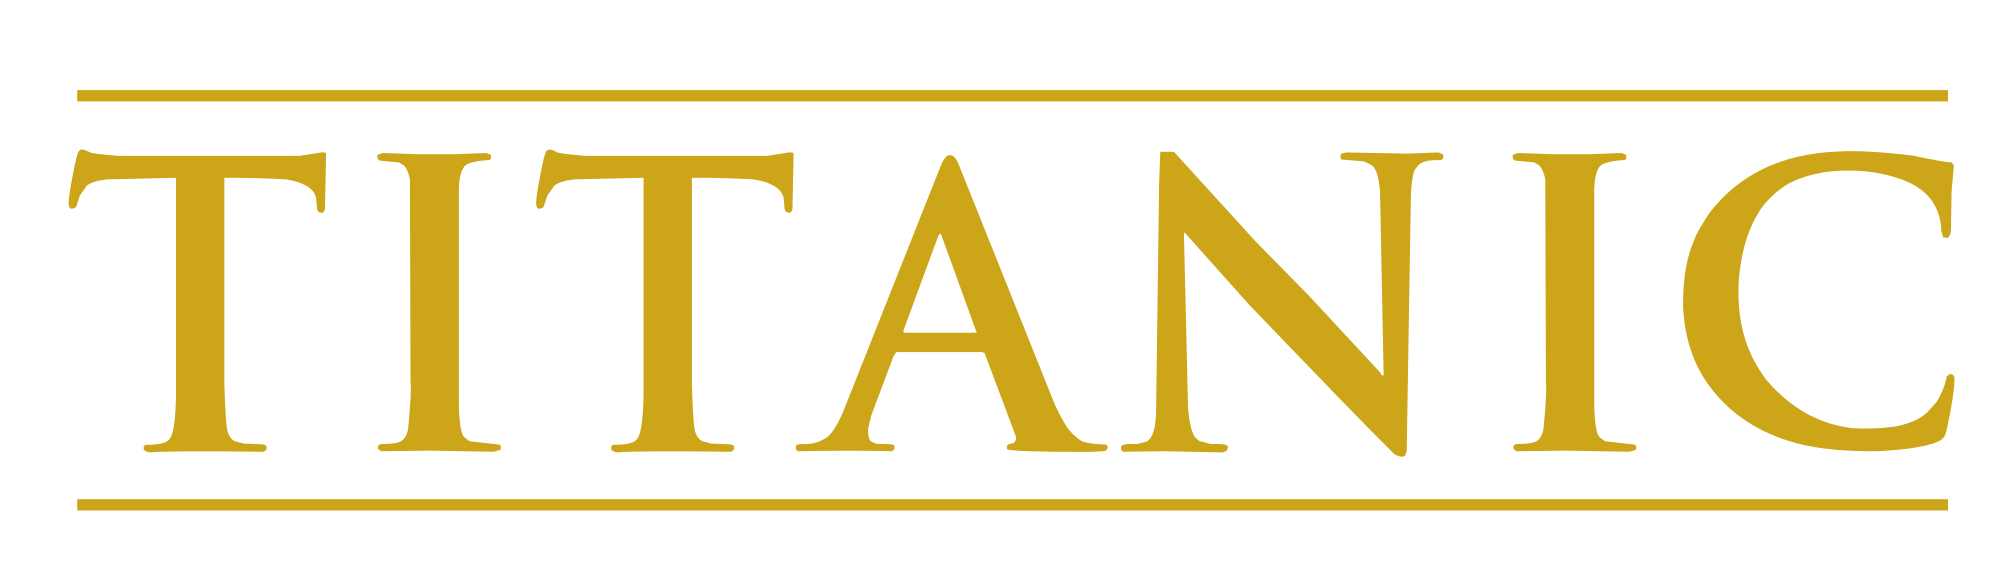 Titanik logosu